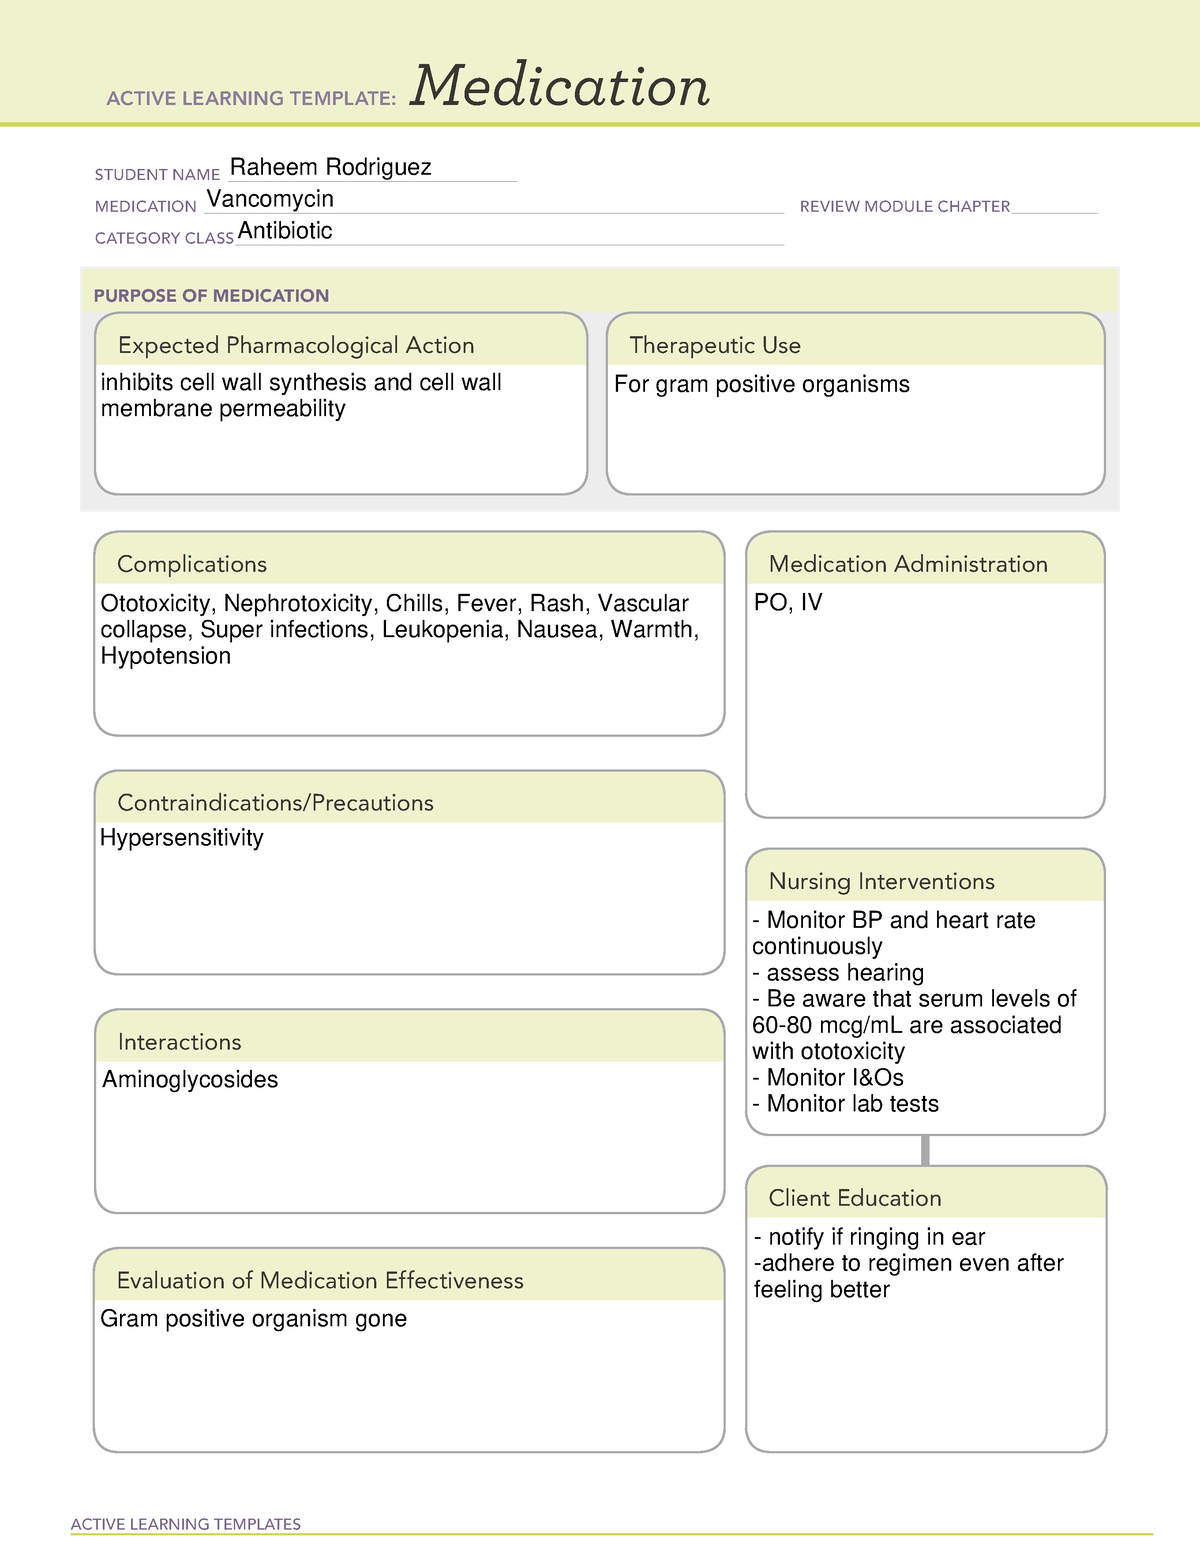 ati-medication-template-vancomycin-active-learning-templates